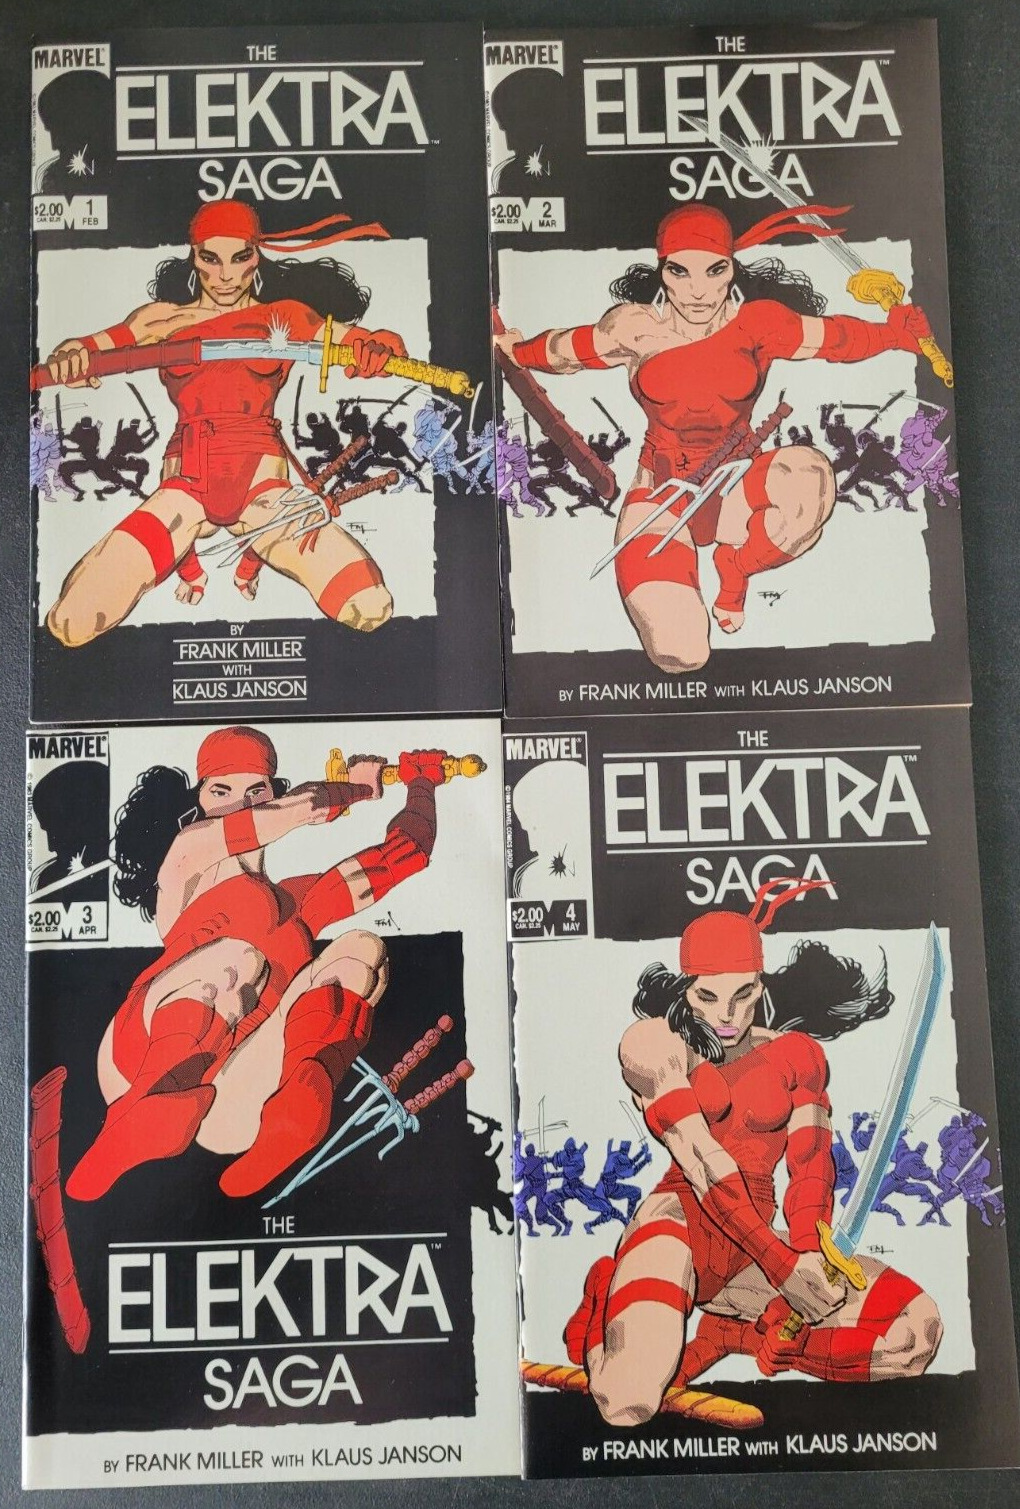 THE ELEKTRA SAGA #1-4 (1984) MARVEL COMICS FULL COMPLETE SERIES FRANK MILLER ART